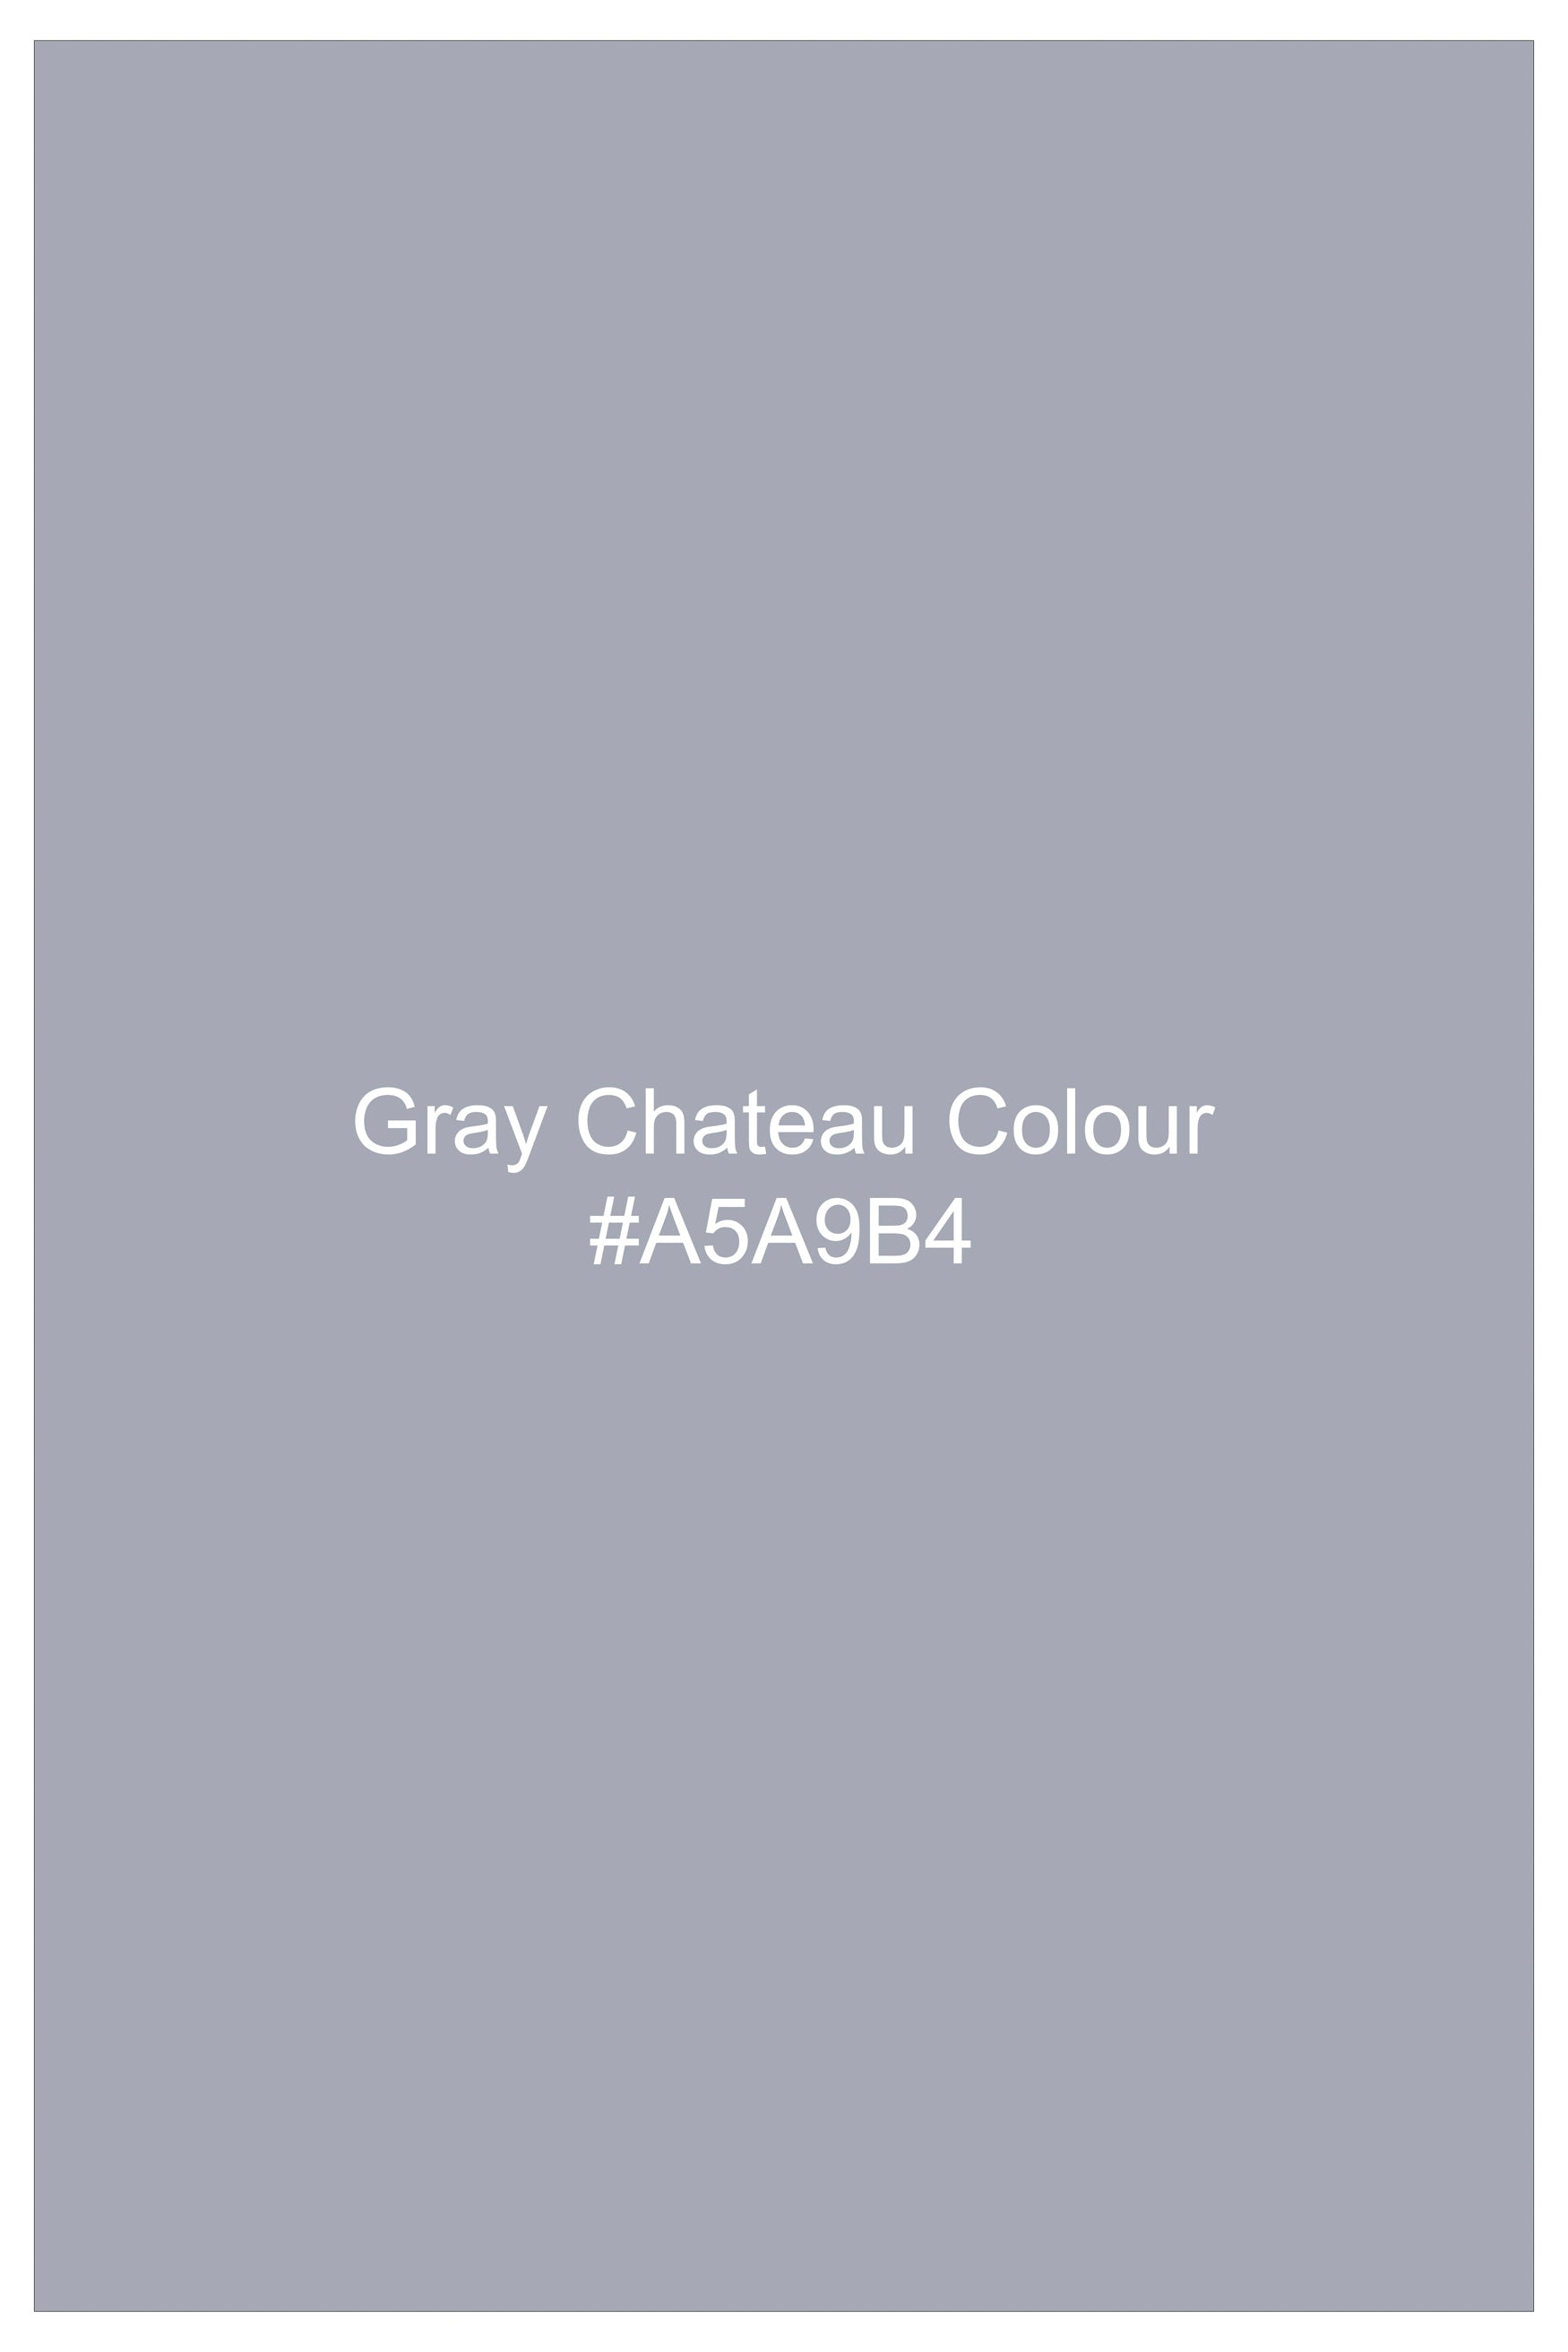 Chateau Gray windowpane Twill Premium Cotton Shirt